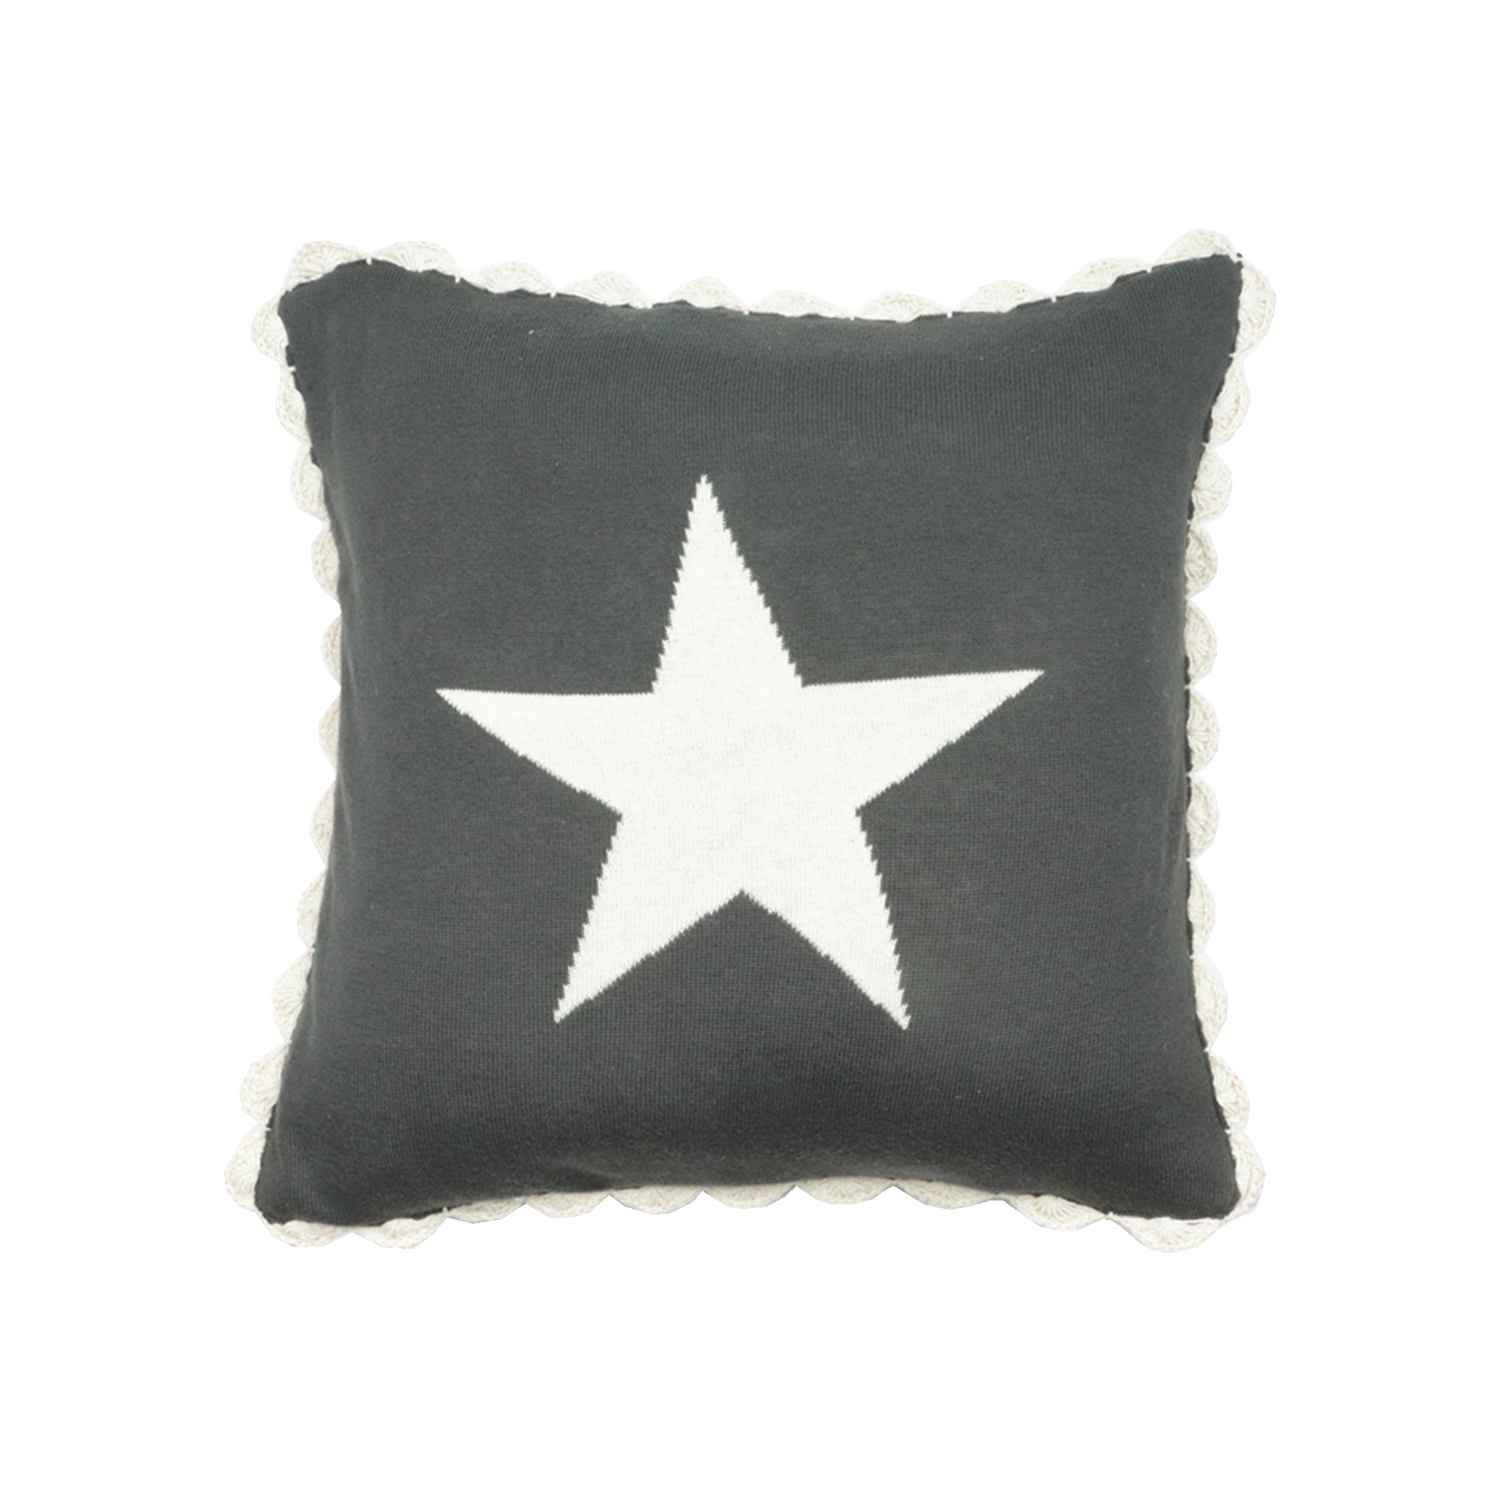 Star Knitted Cushion Crochet Charcoal 40x40cm Gift